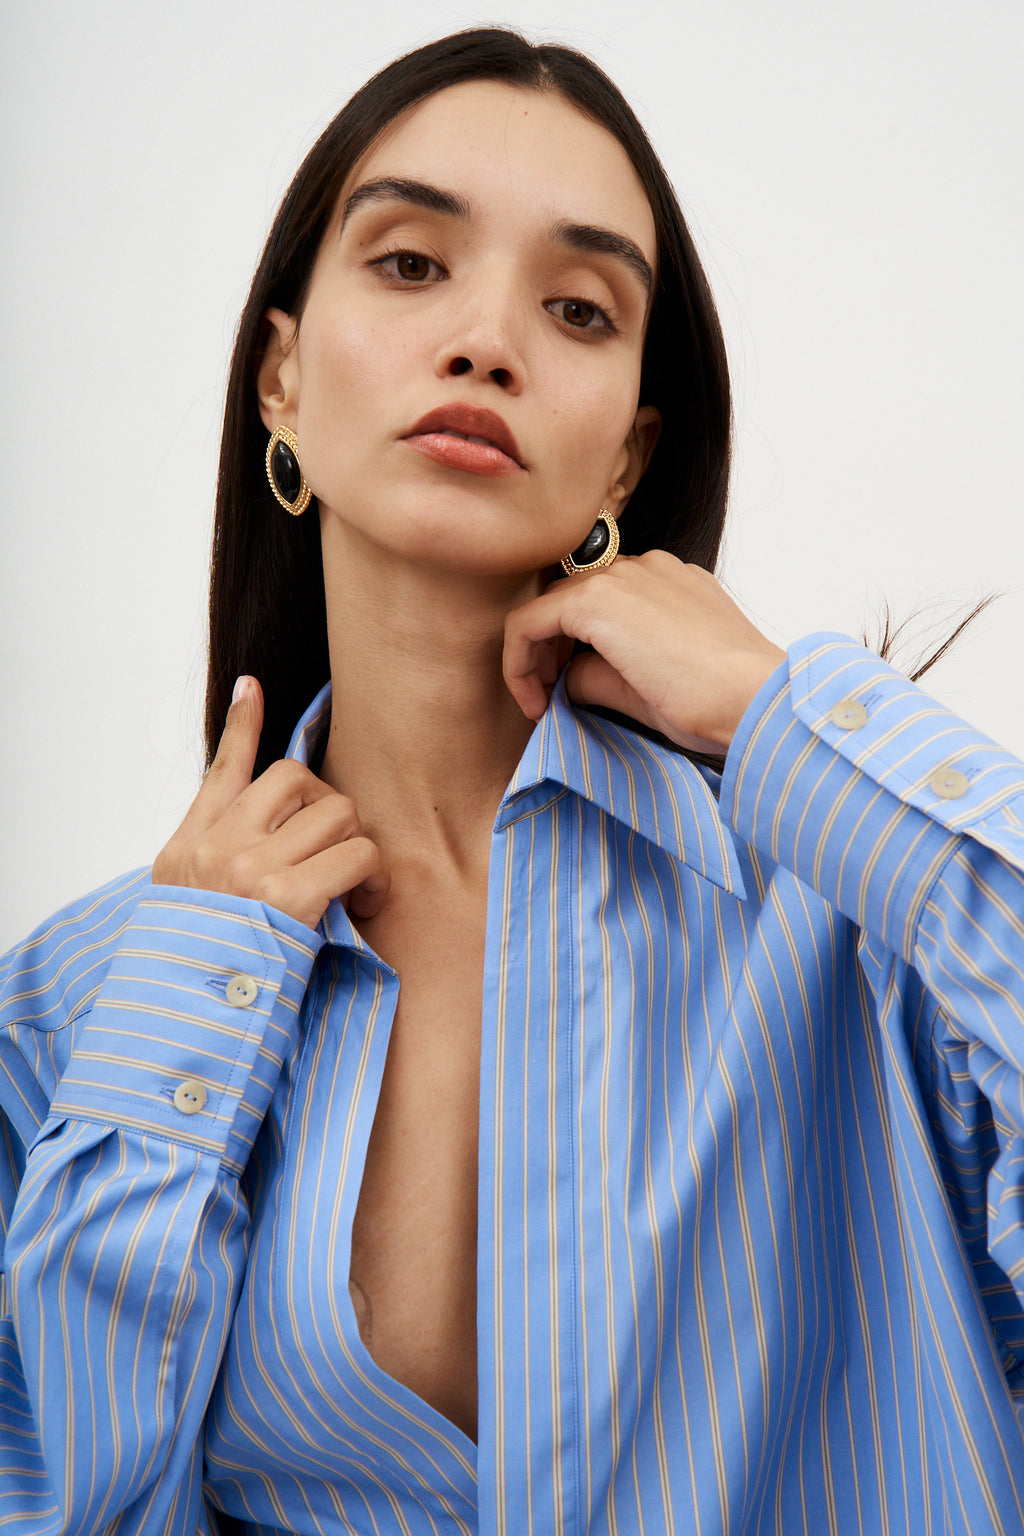 Lana Blue Striped Shirt